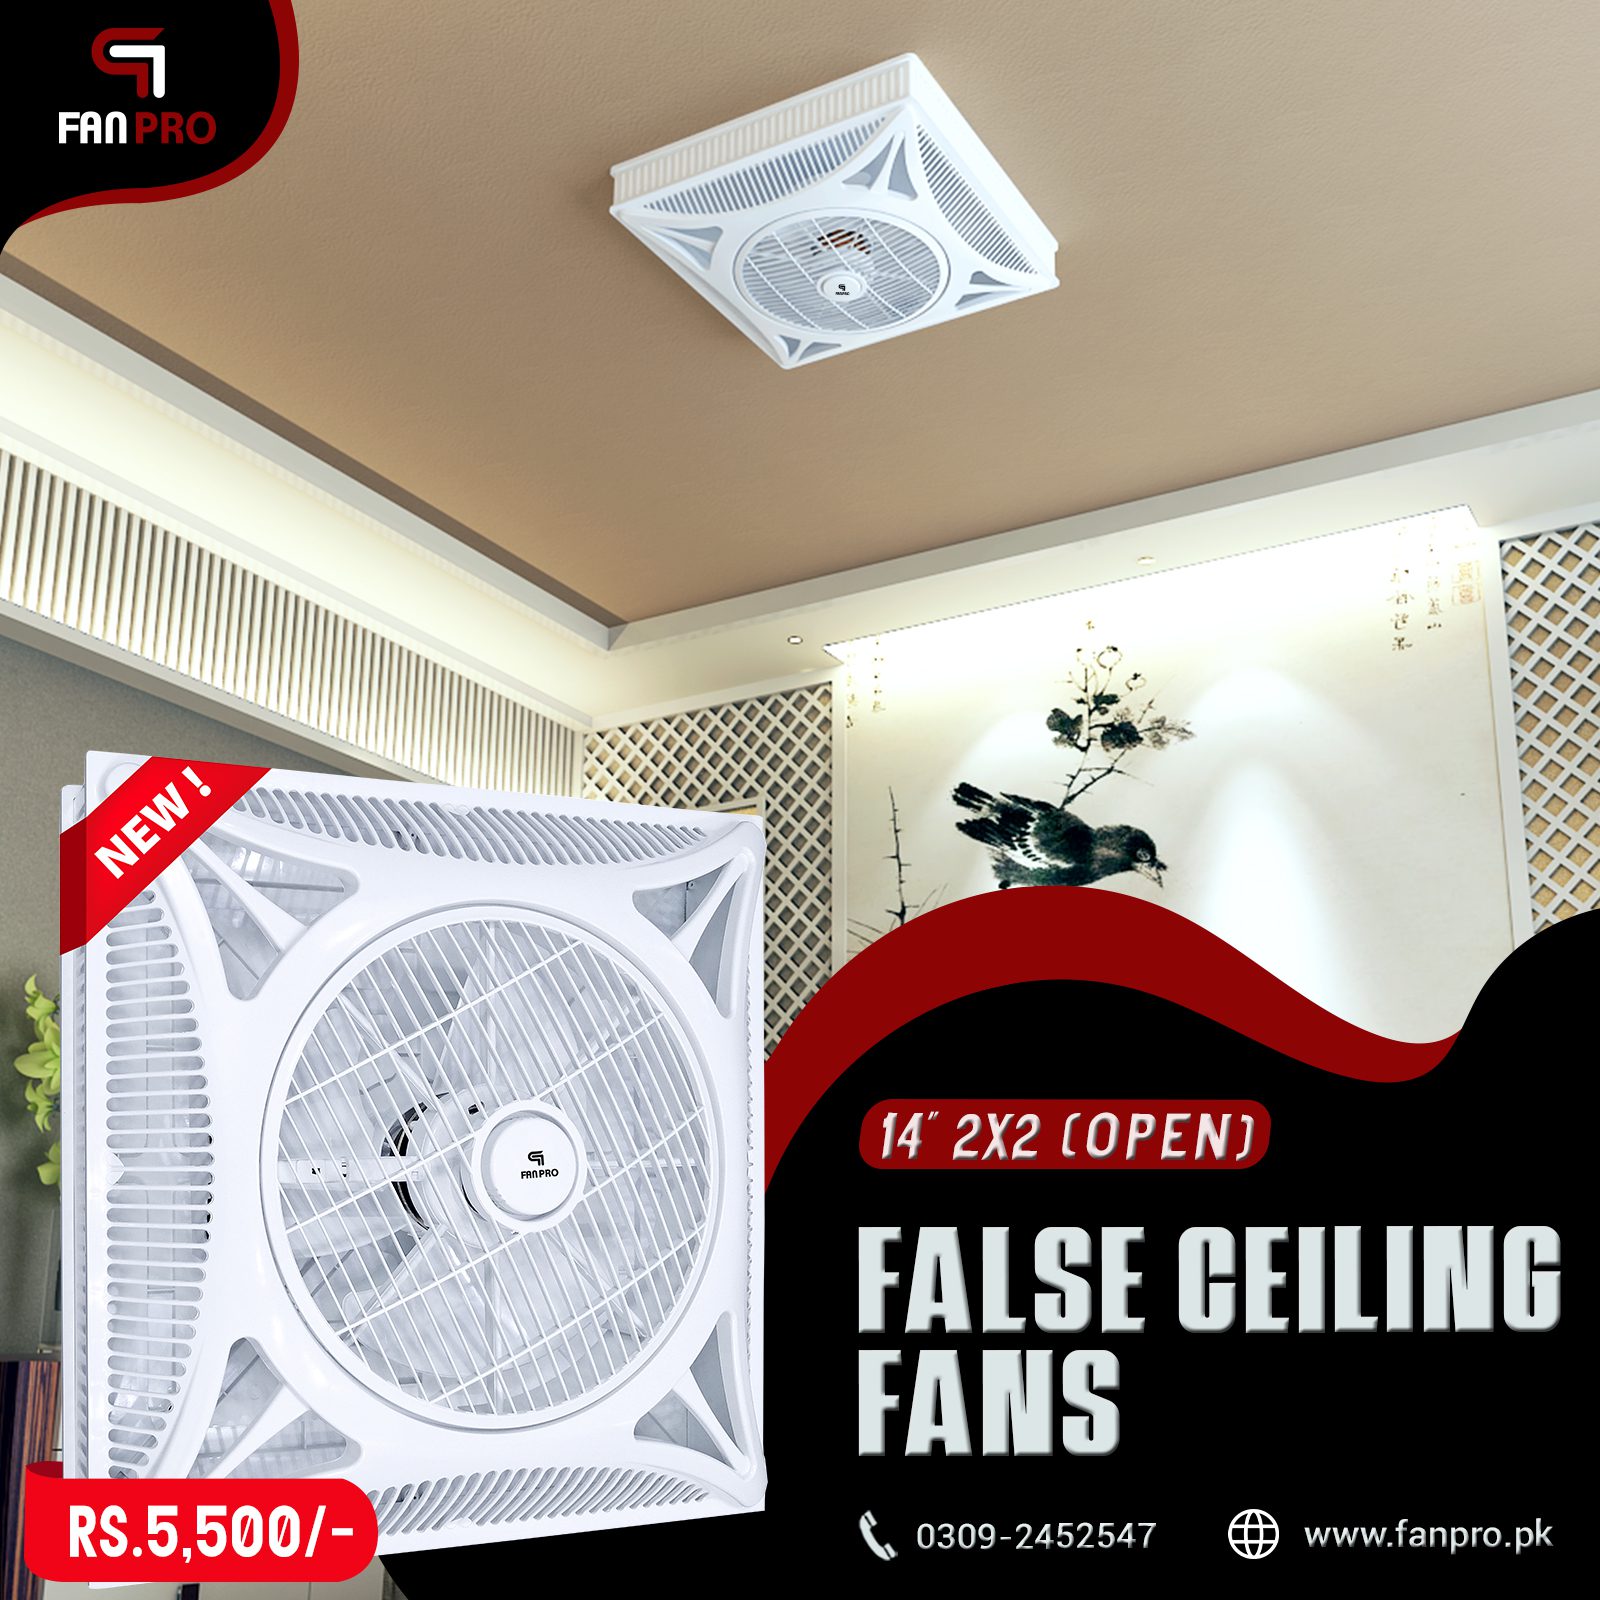 Royal False Ceiling Fan – Royal Fans